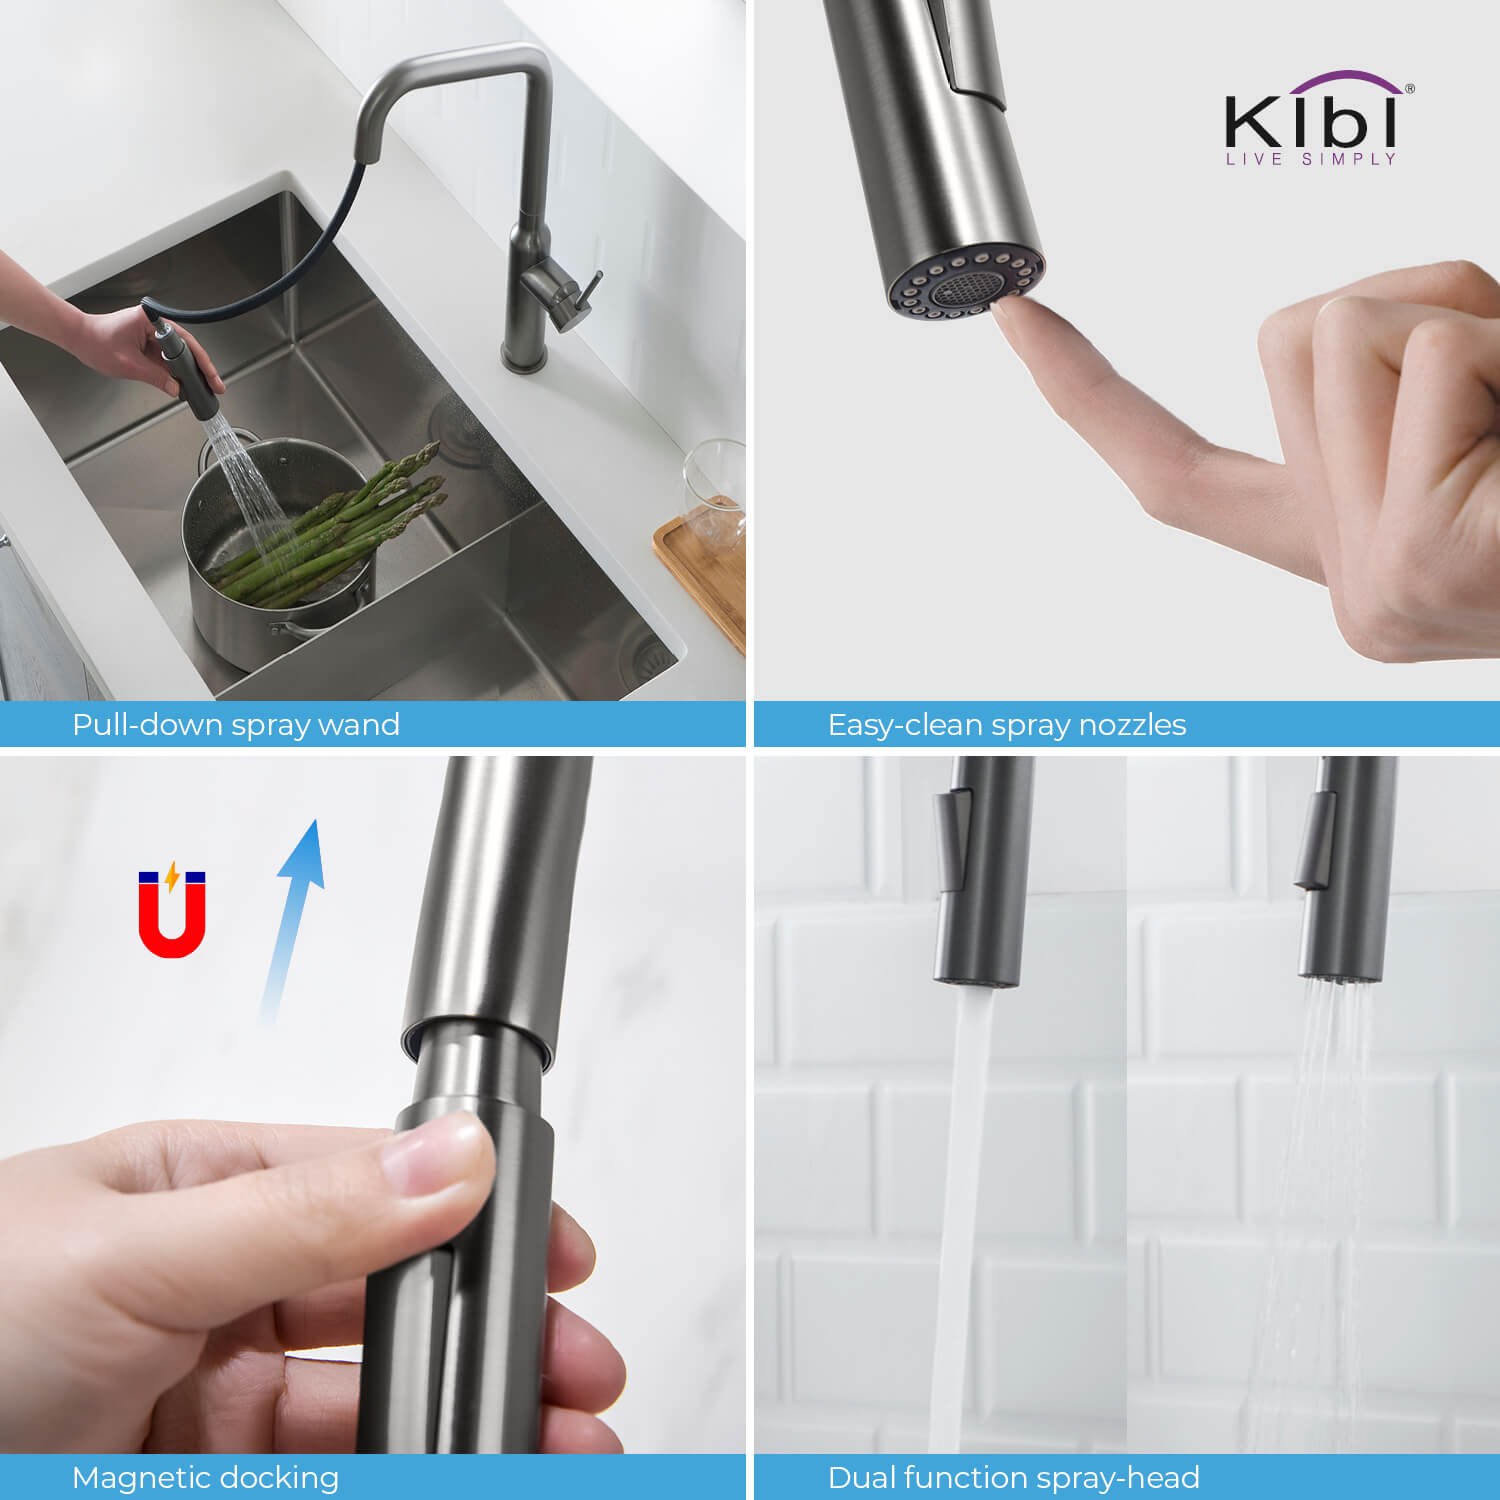 Kibi Macon Single Handle High Arc Pull Down Kitchen Faucet in Titanium Finish